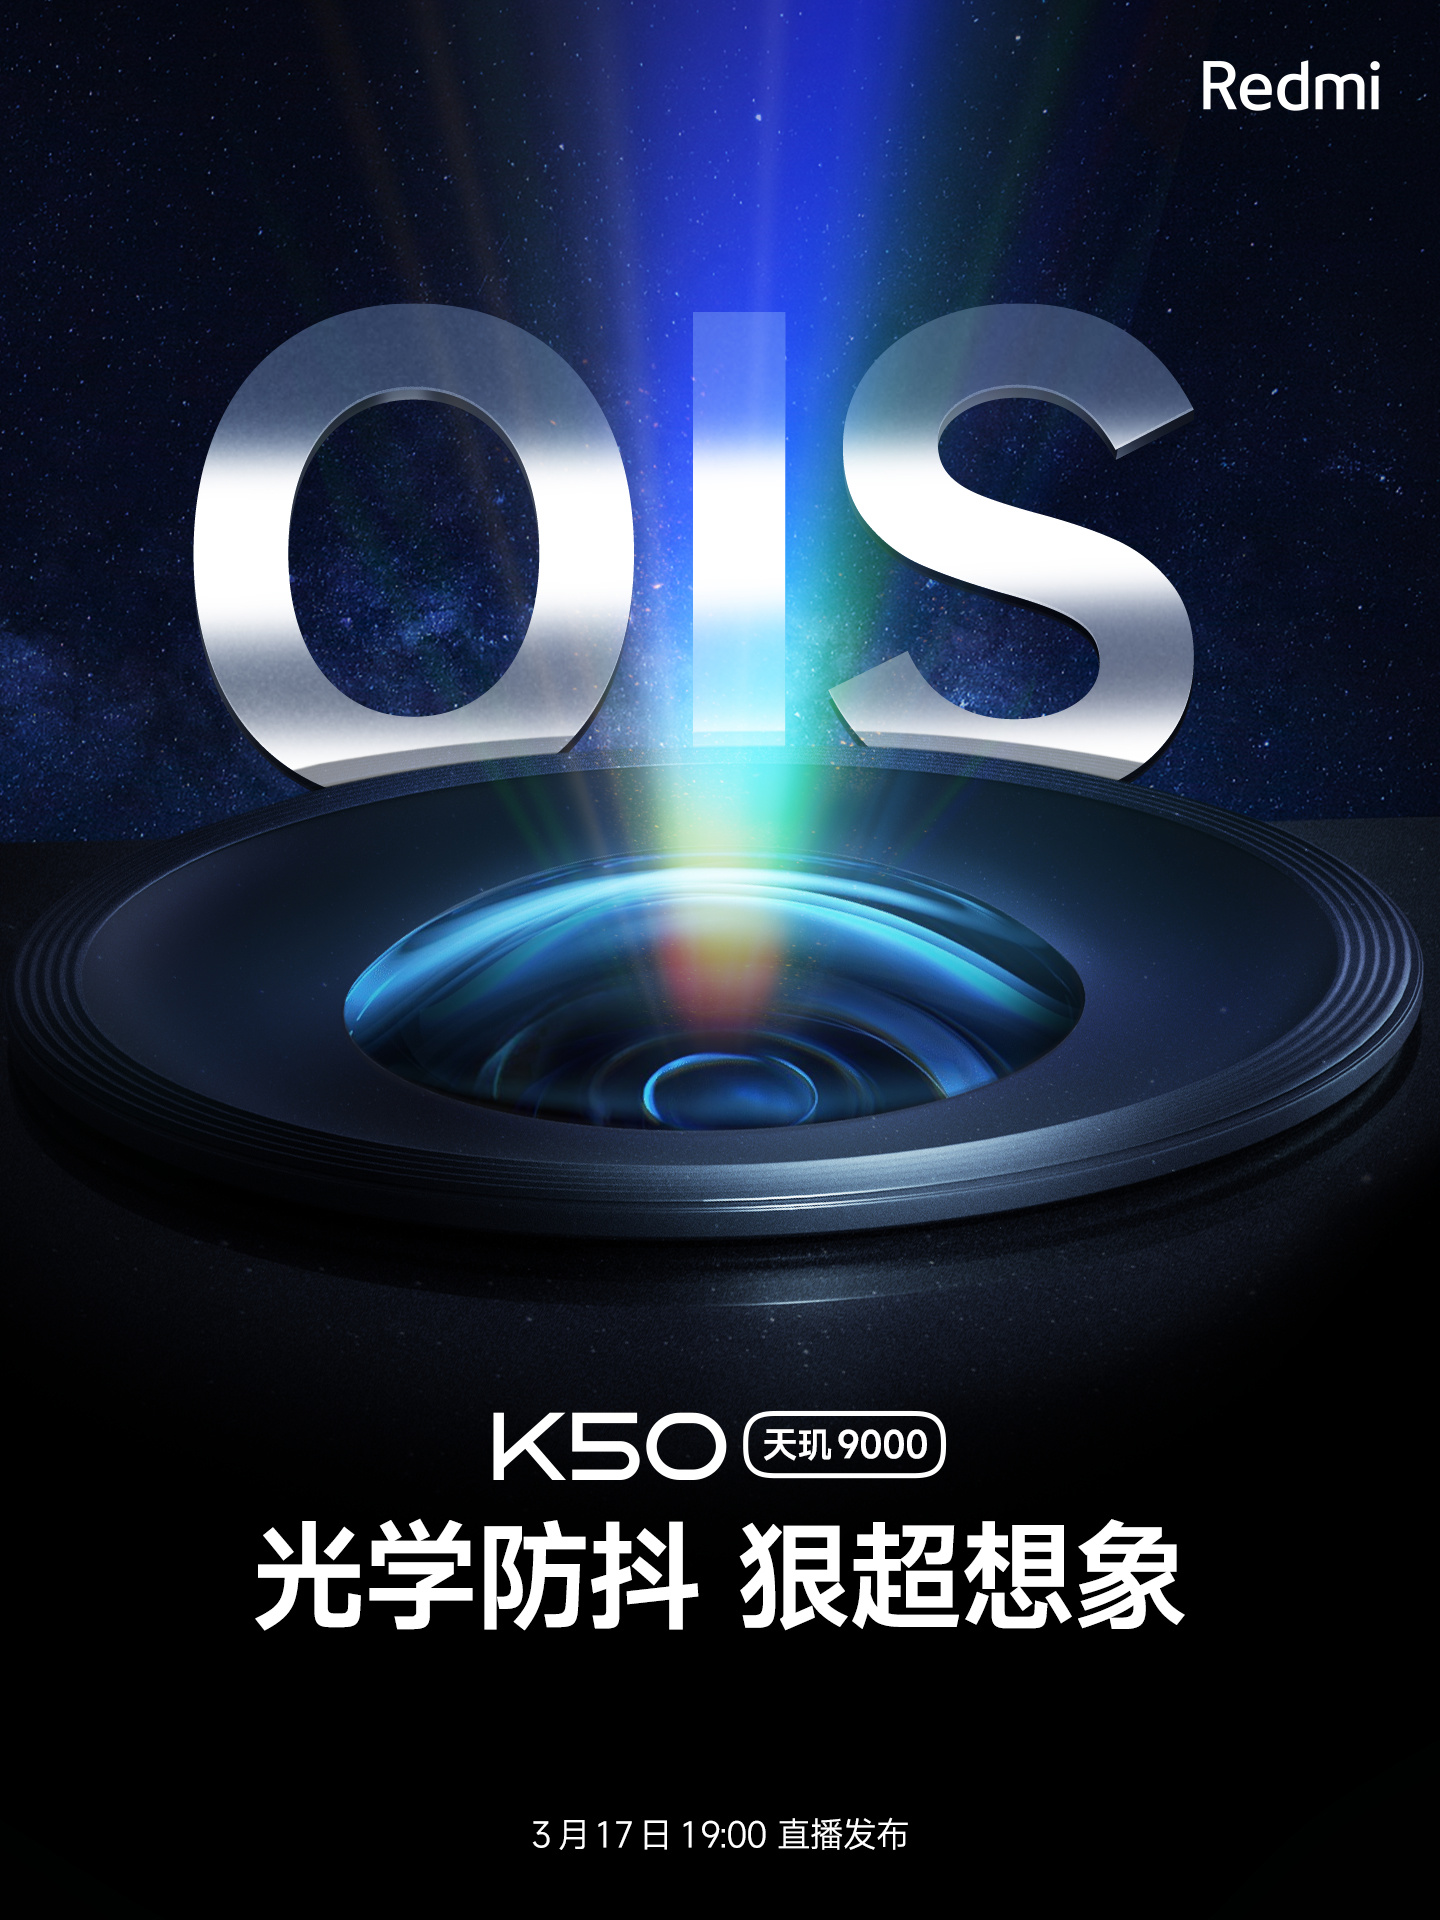 Redmi K50 Series teaser